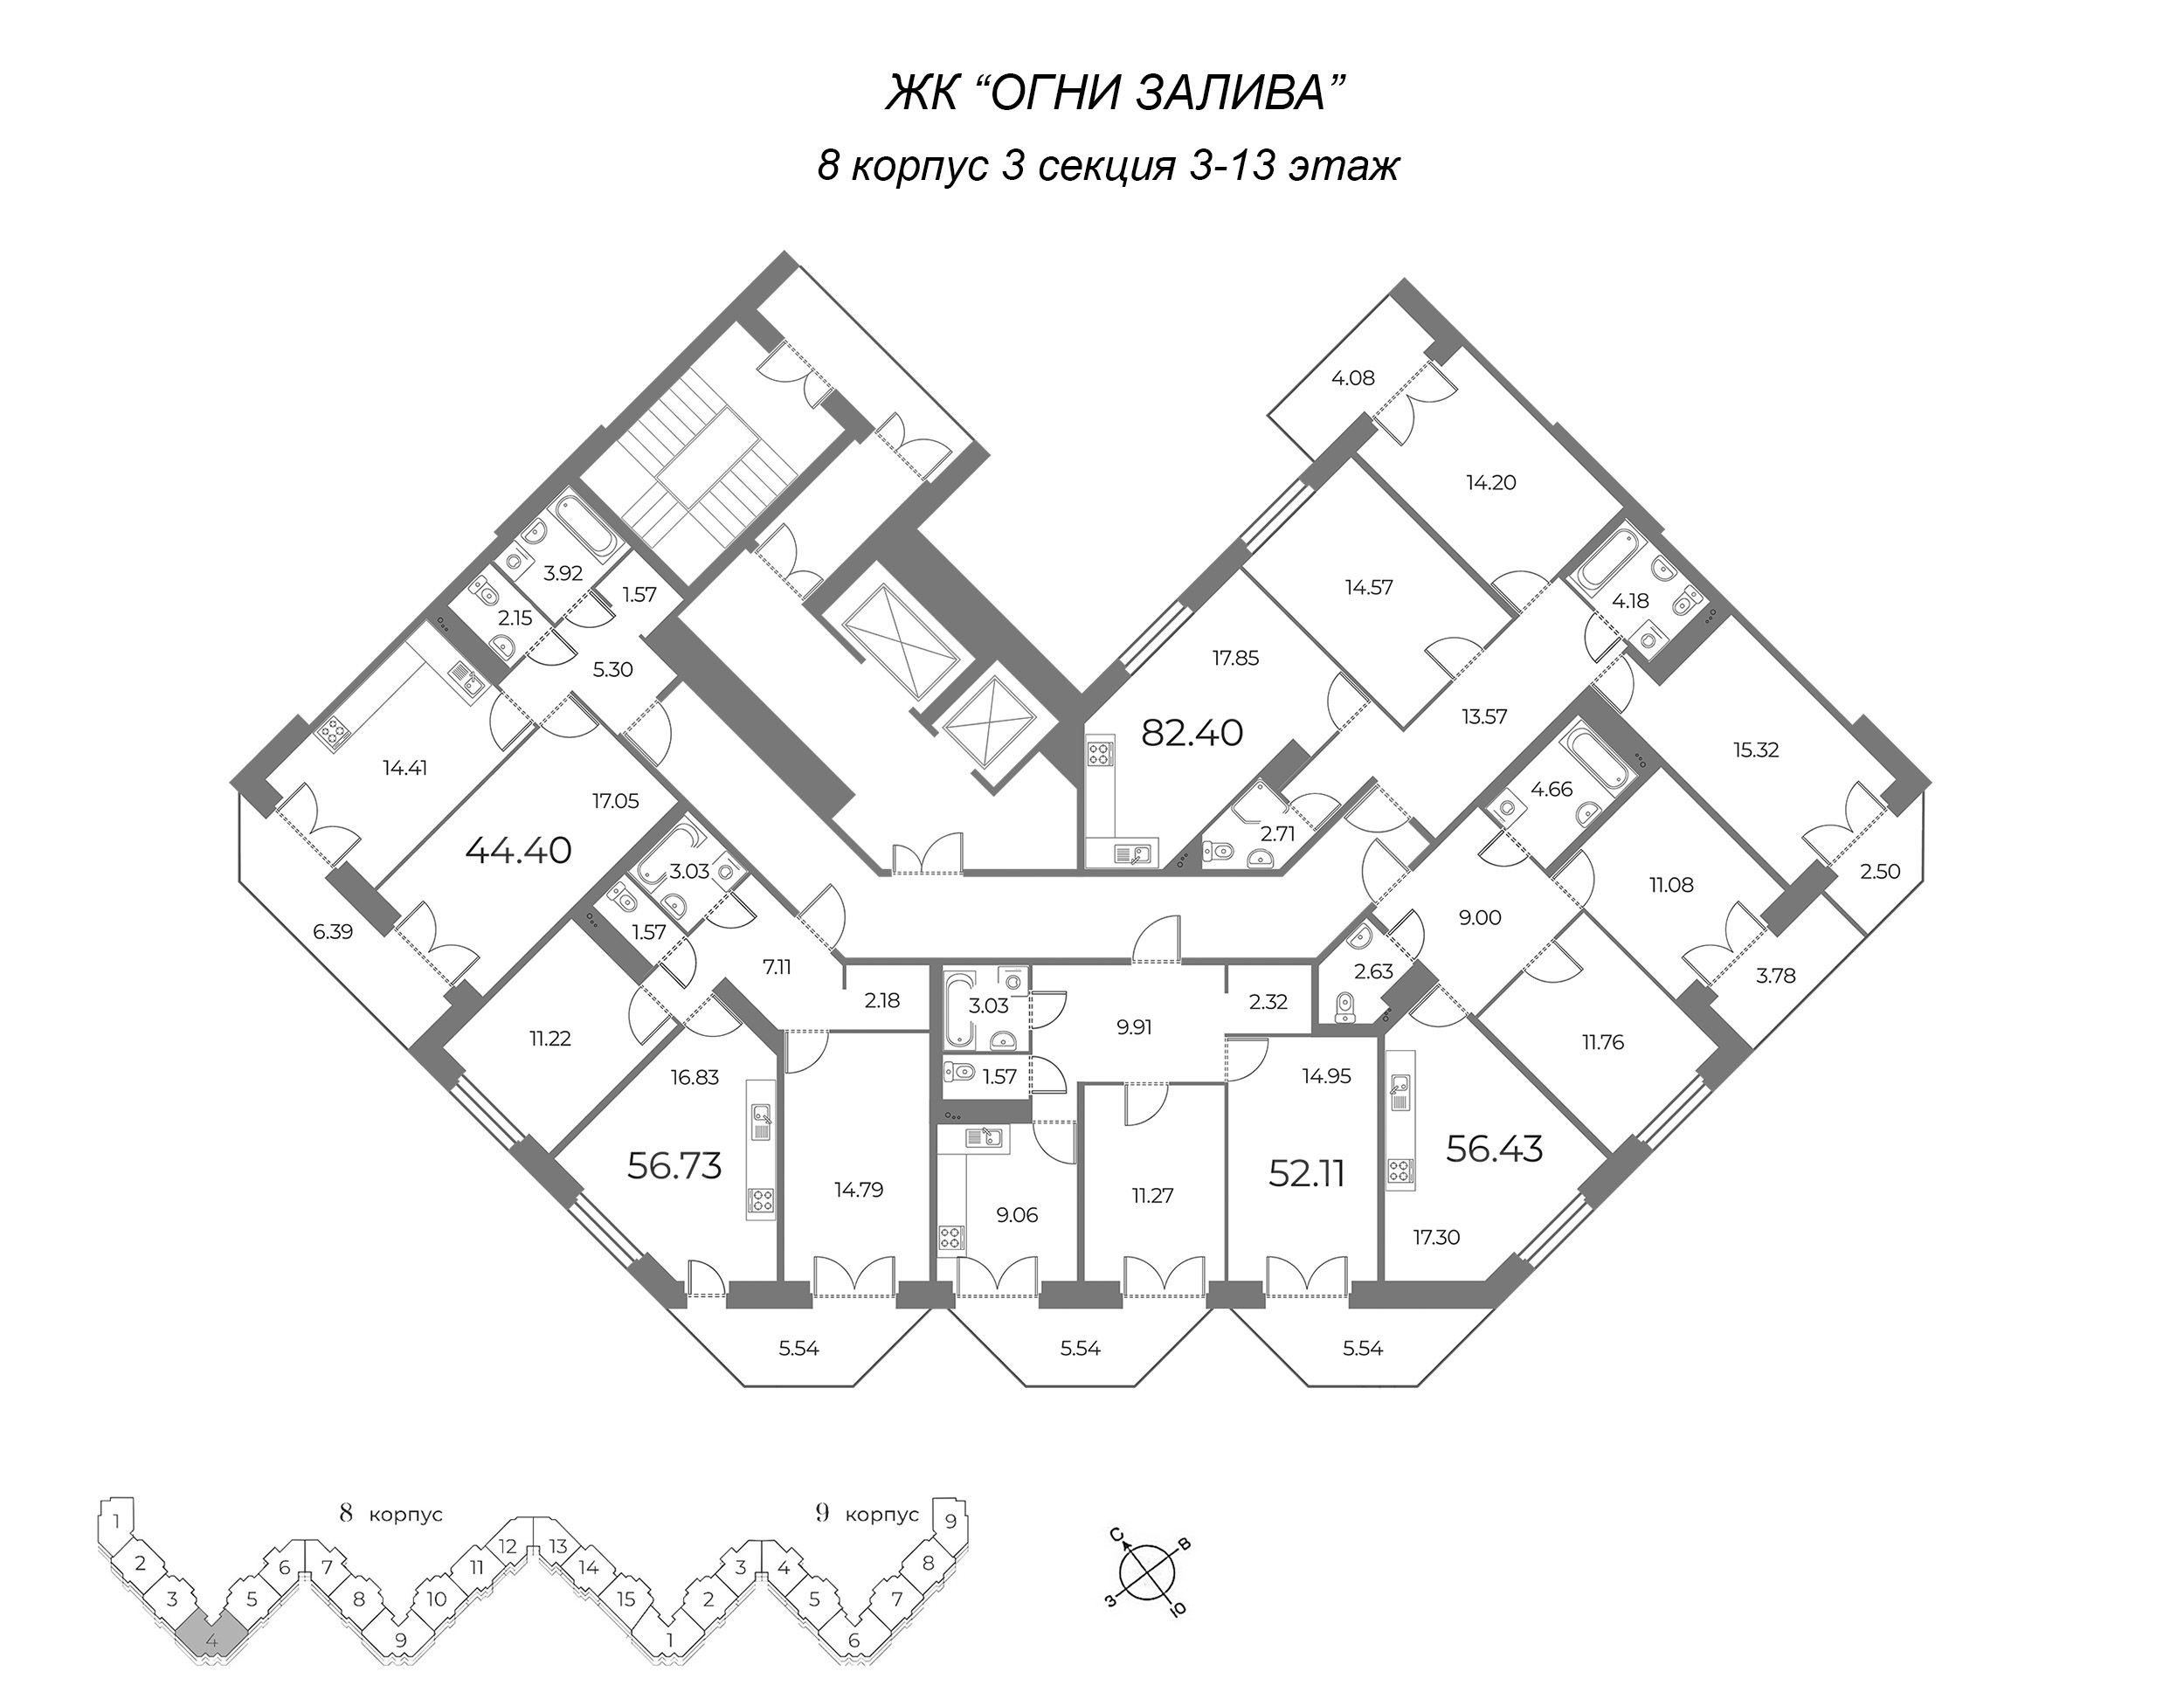 4-комнатная (Евро) квартира, 85.69 м² - планировка этажа